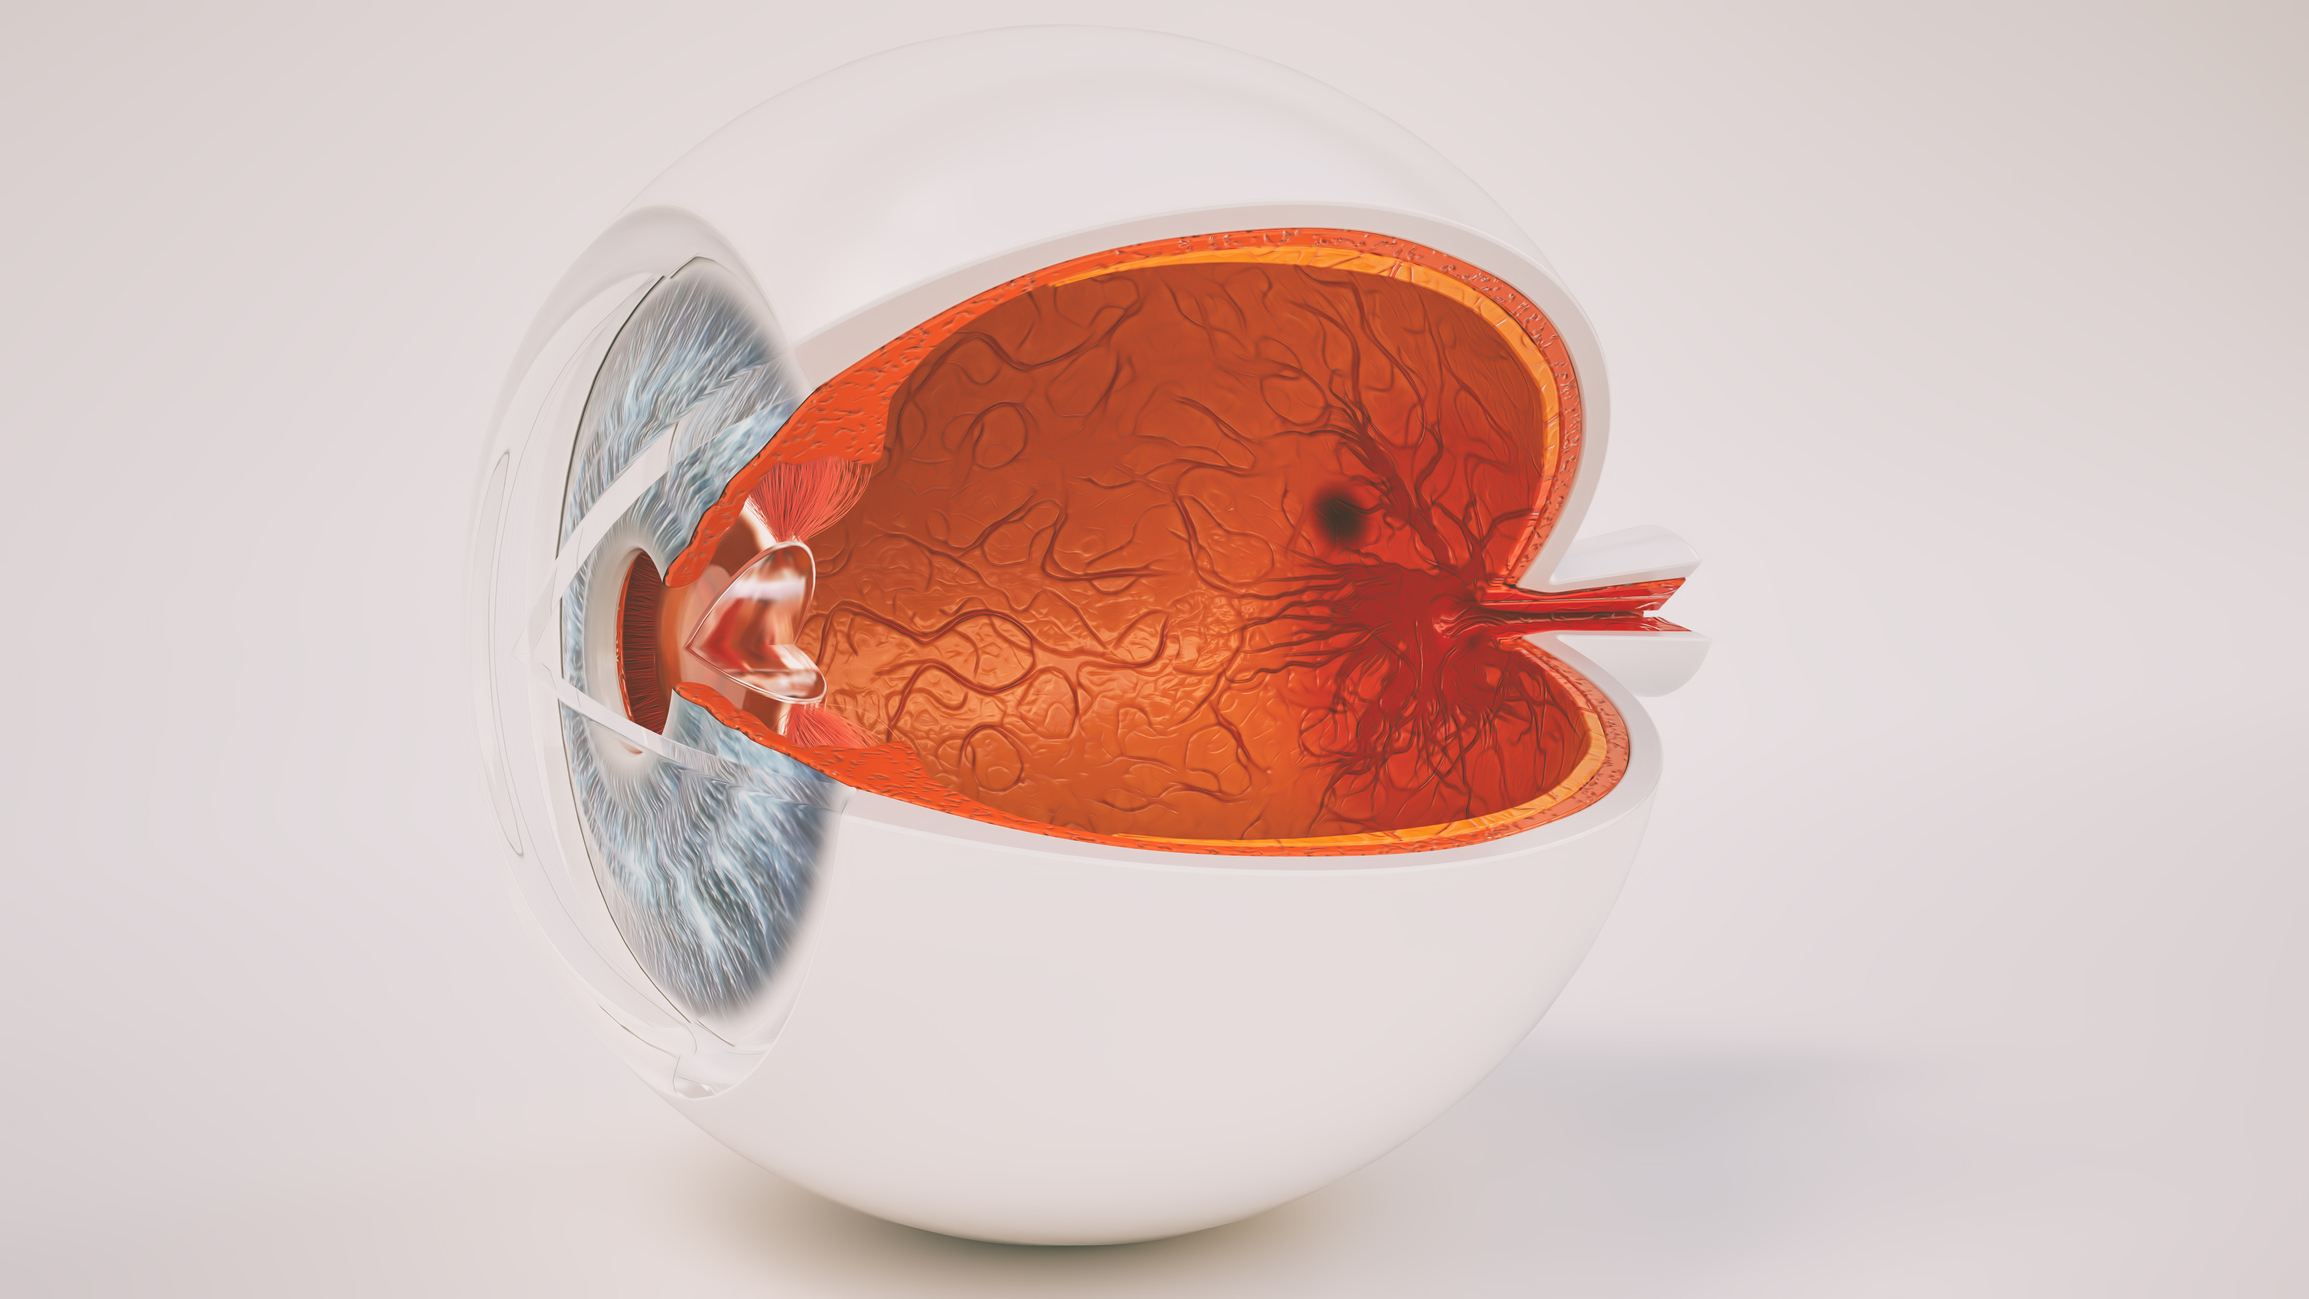 Human eye anatomy very detailed in cross section